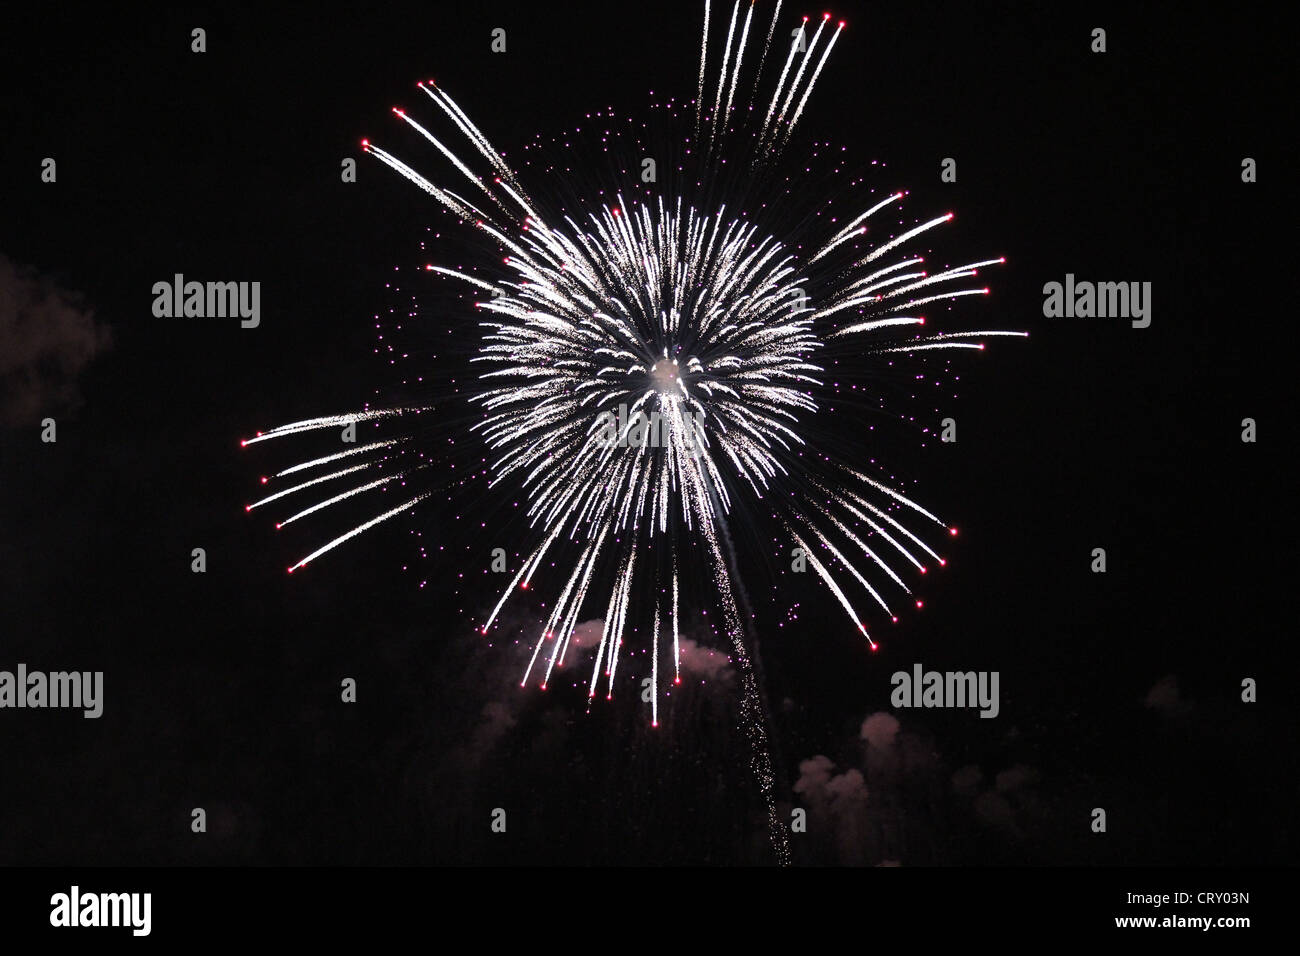 Fireworks display in sky Stock Photo